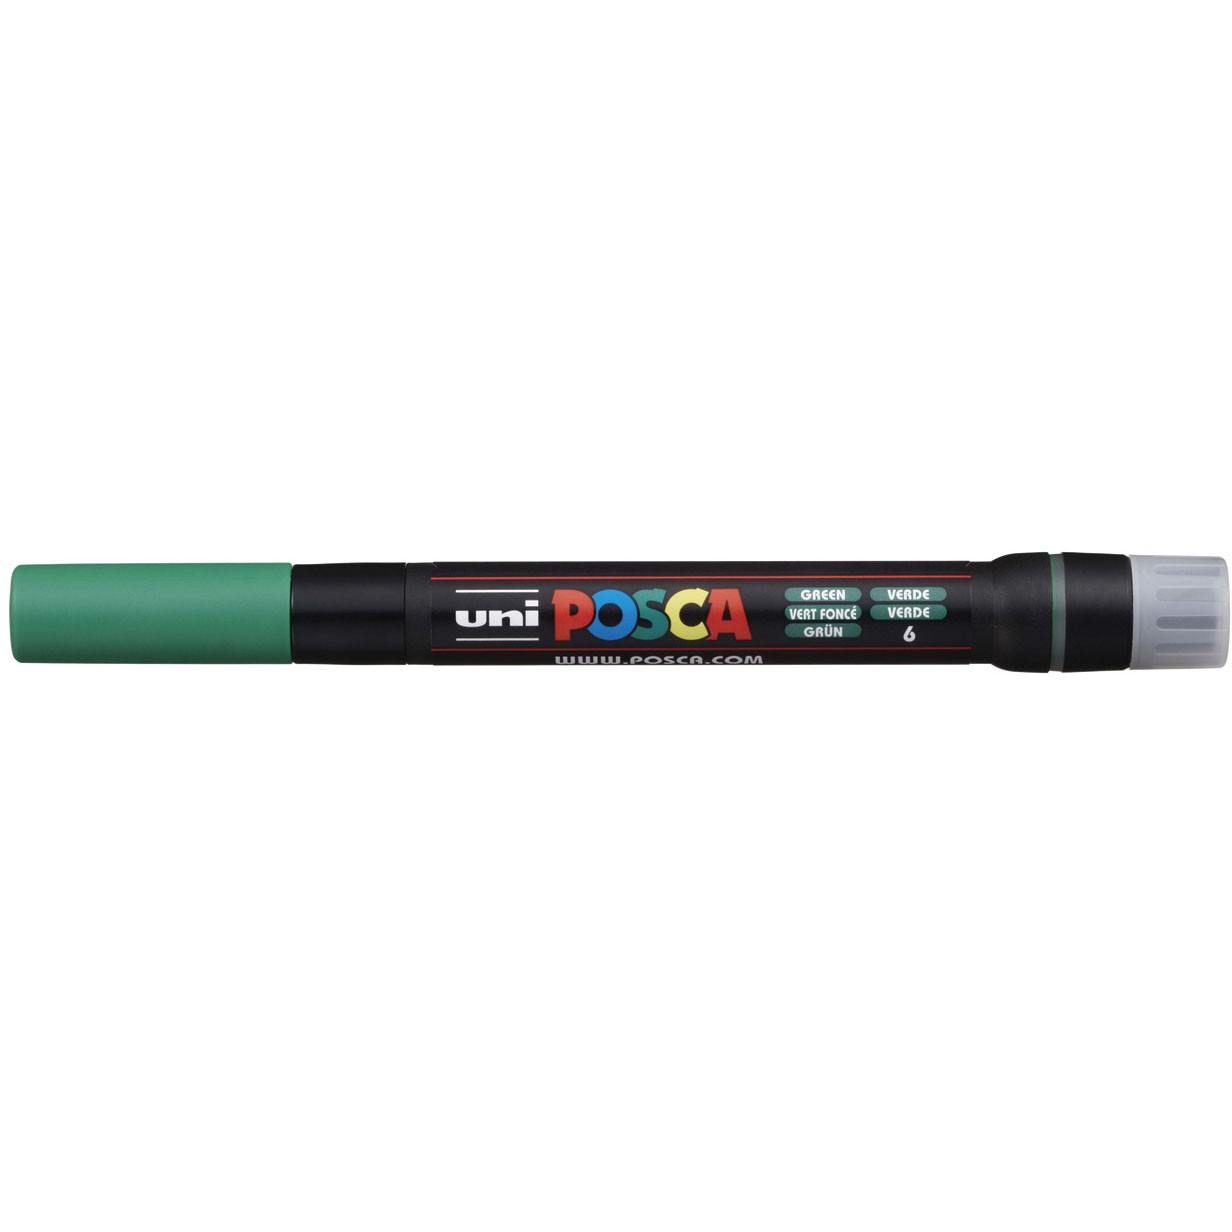 Uni Posca Brush PCF-350 grøn